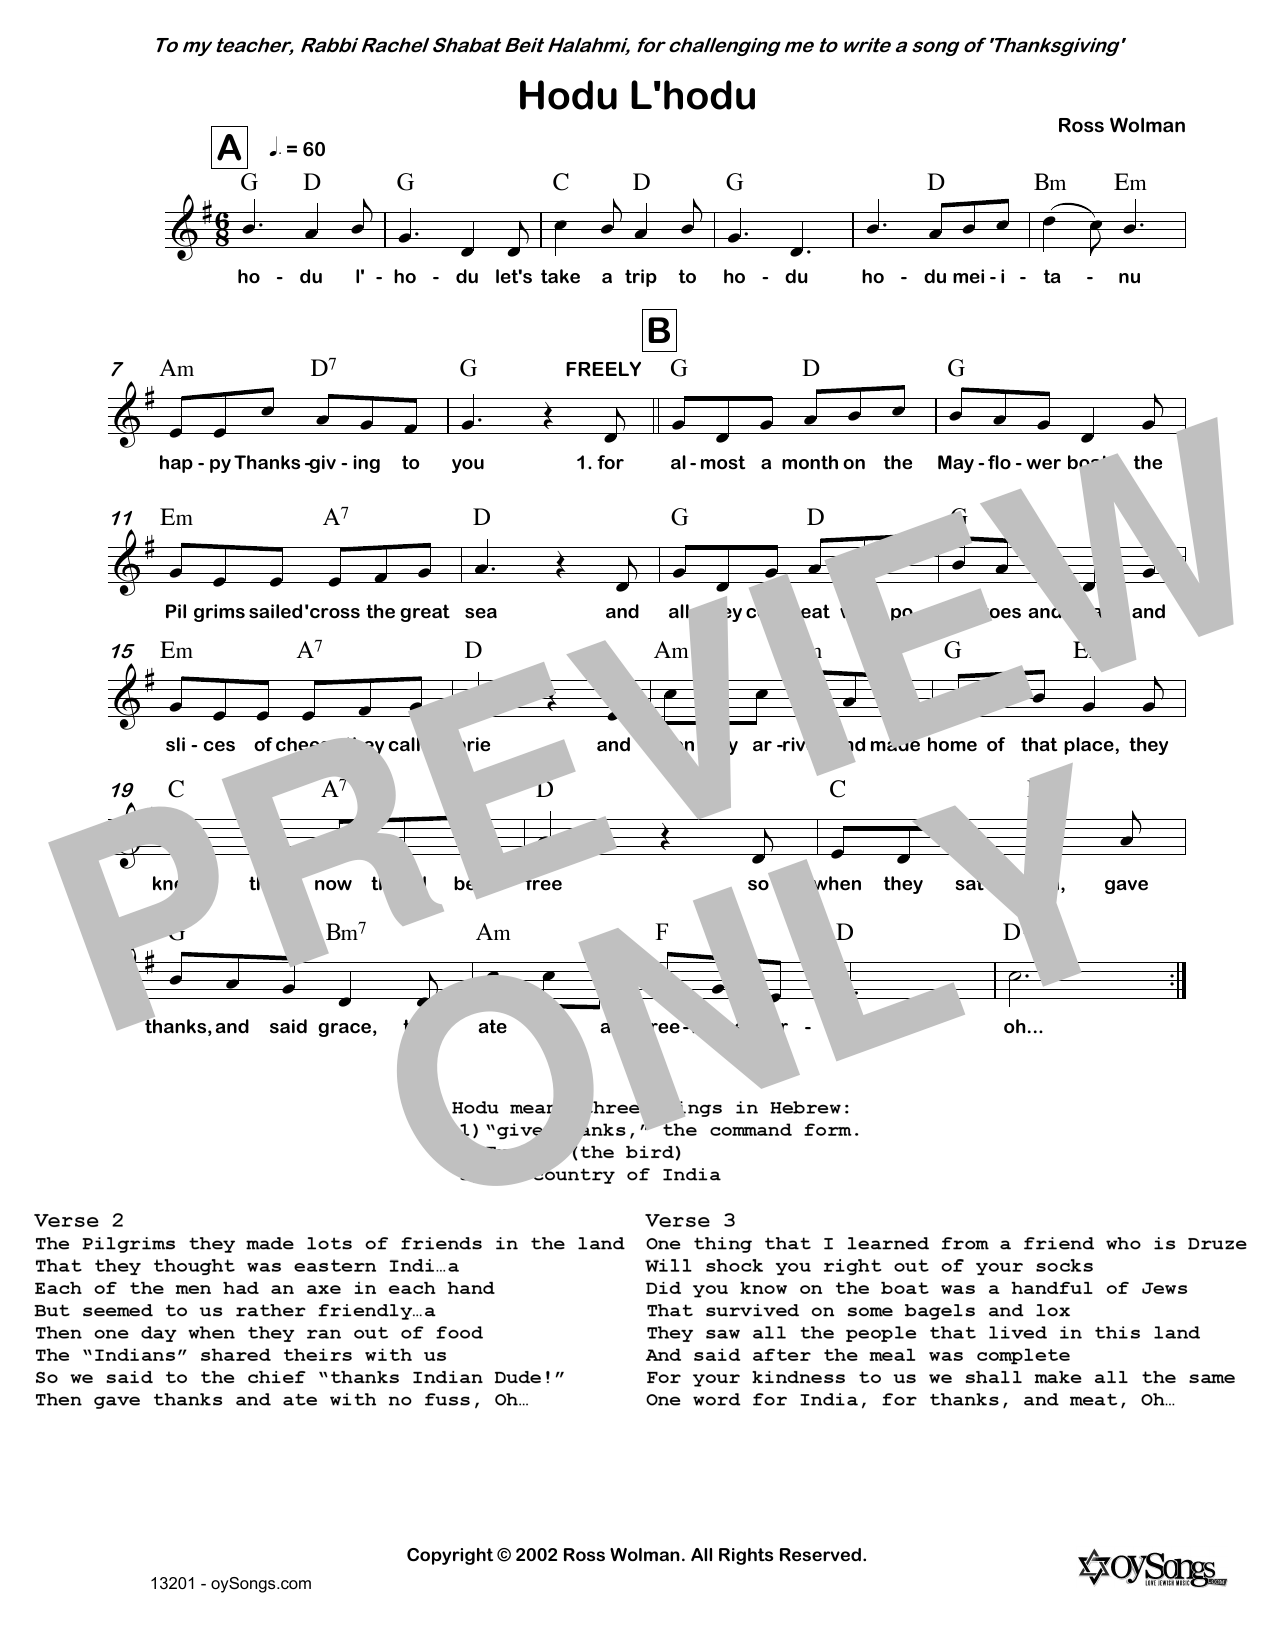 Ross Wolman Hodu L'hodu Sheet Music Notes & Chords for Melody Line, Lyrics & Chords - Download or Print PDF